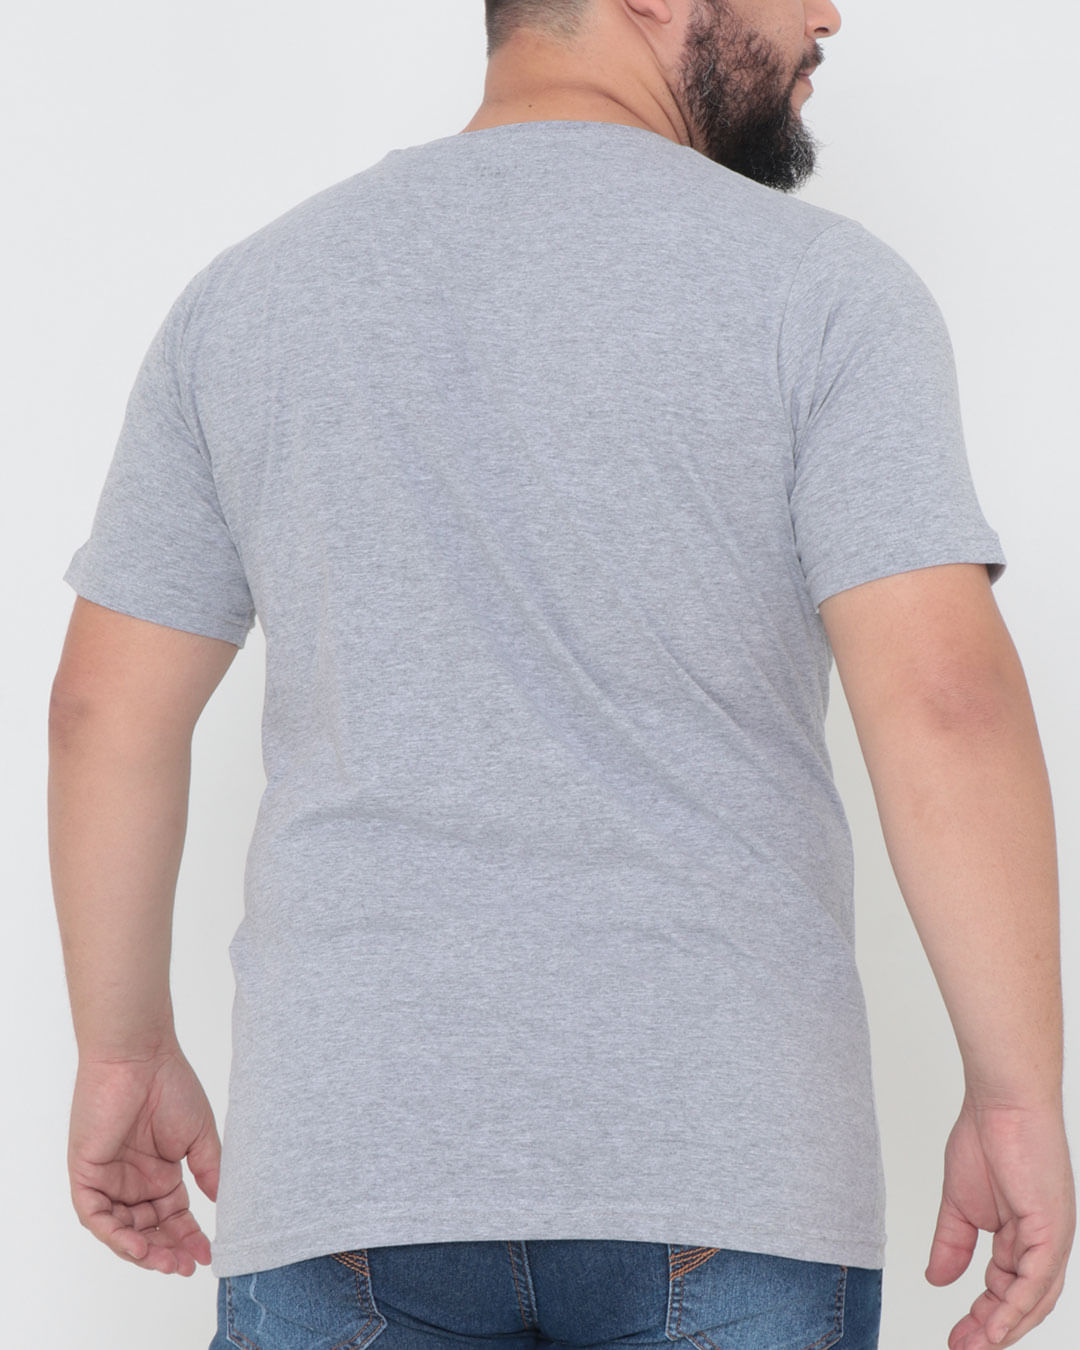 Camiseta-Masculina-Plus-Size-Basica-Mescla-Cinza